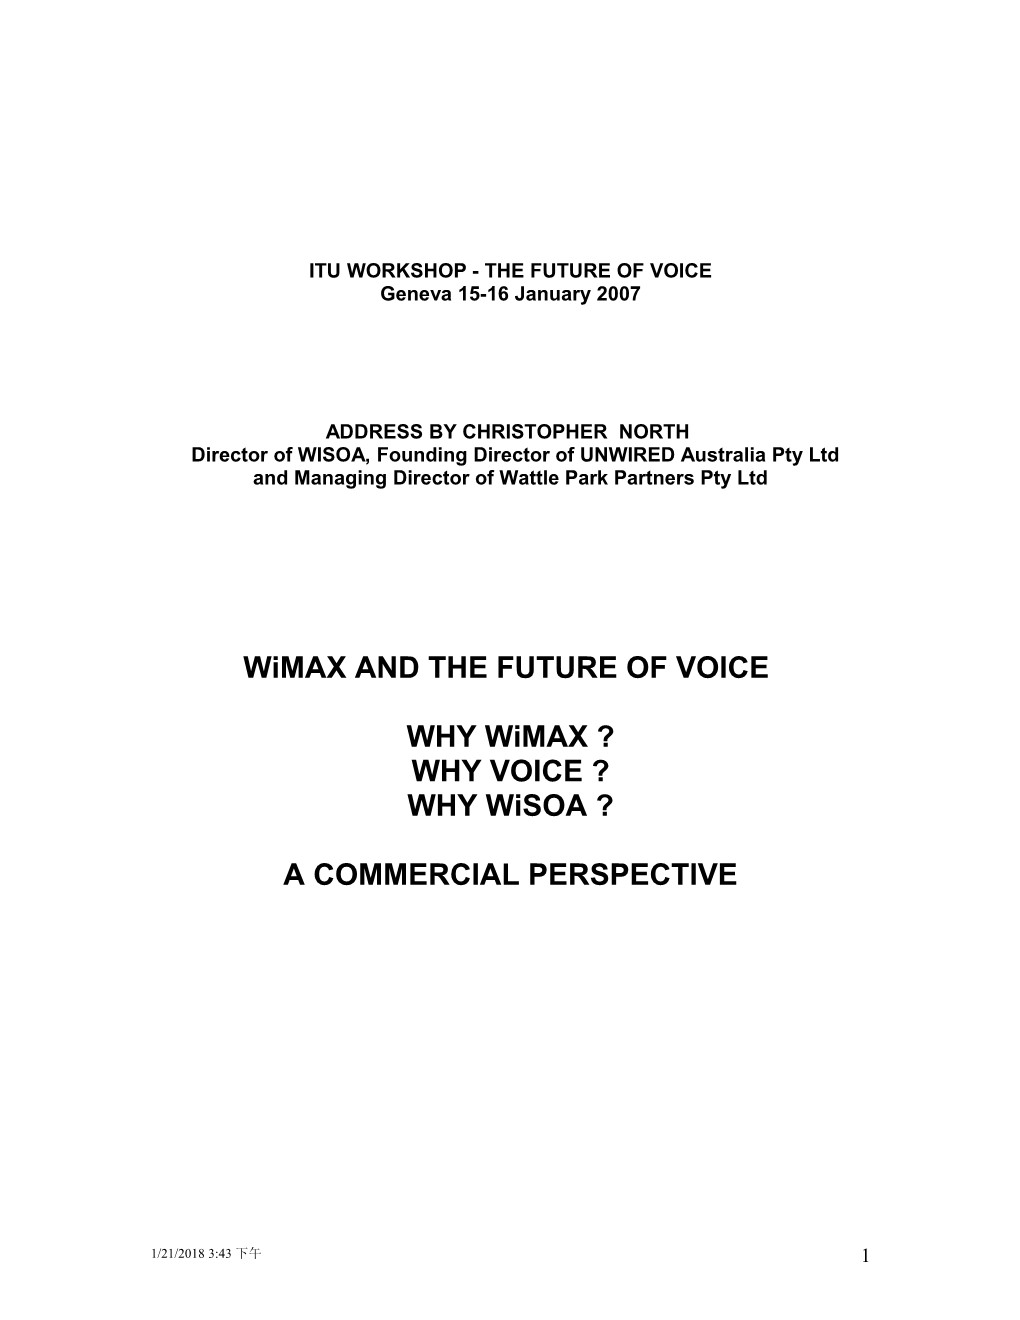 Itu Workshop - the Future of Voice